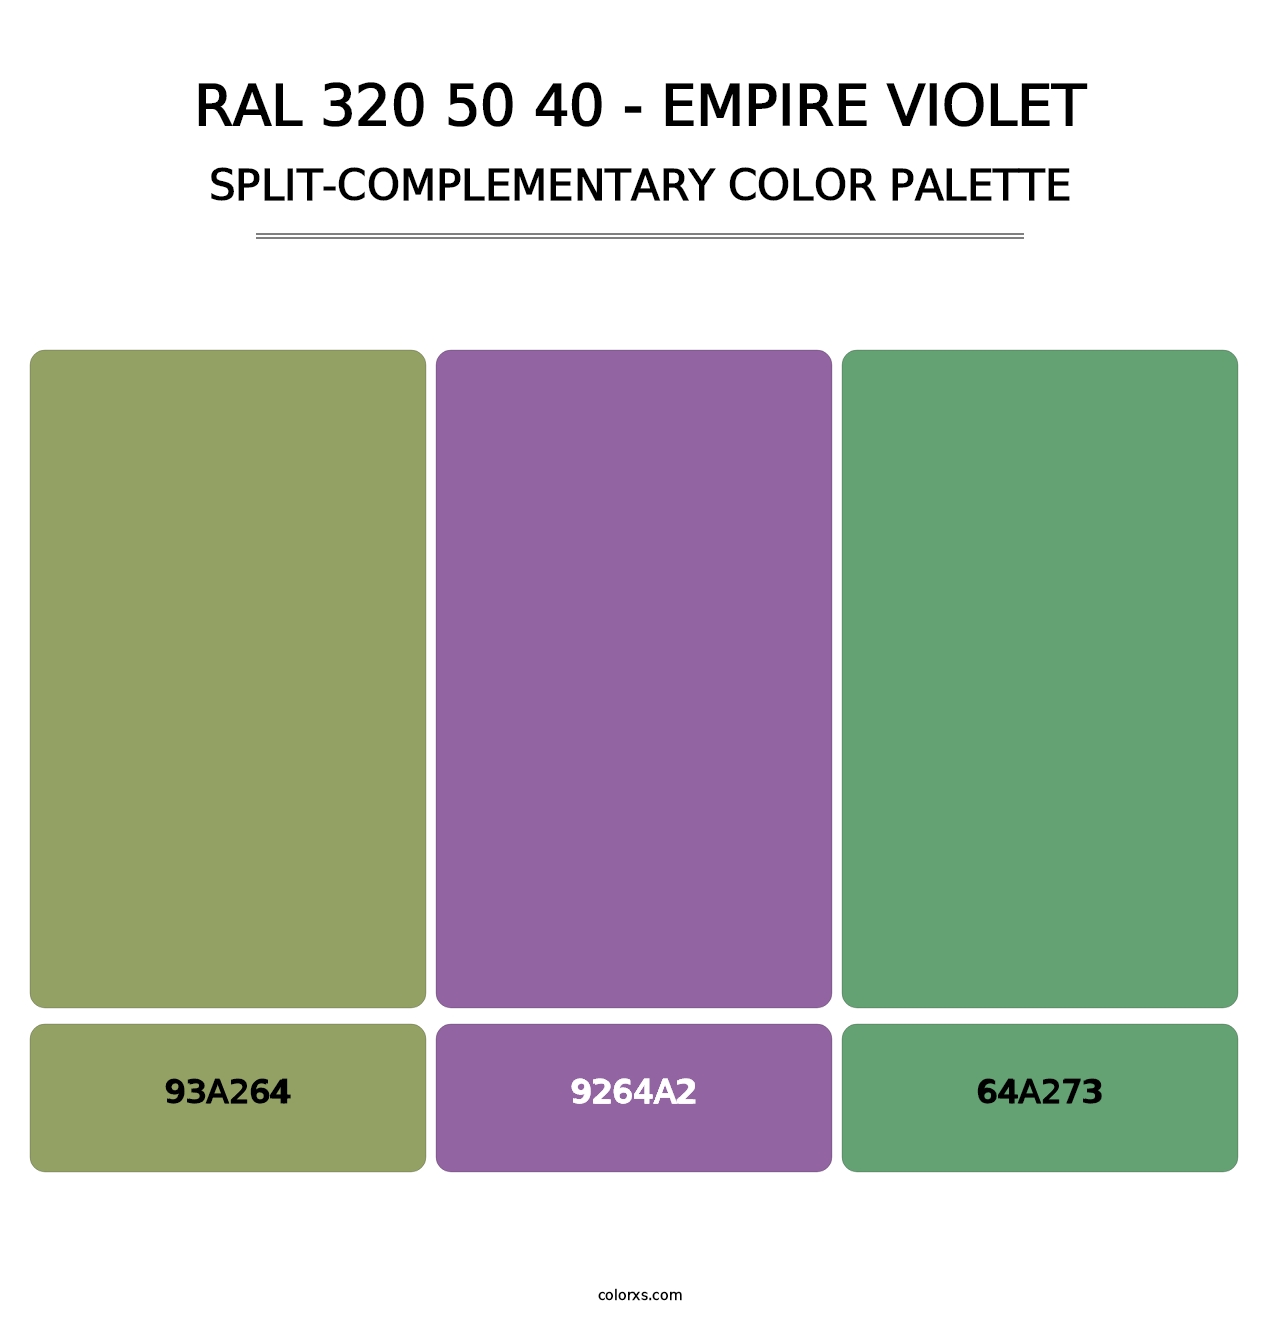 RAL 320 50 40 - Empire Violet - Split-Complementary Color Palette